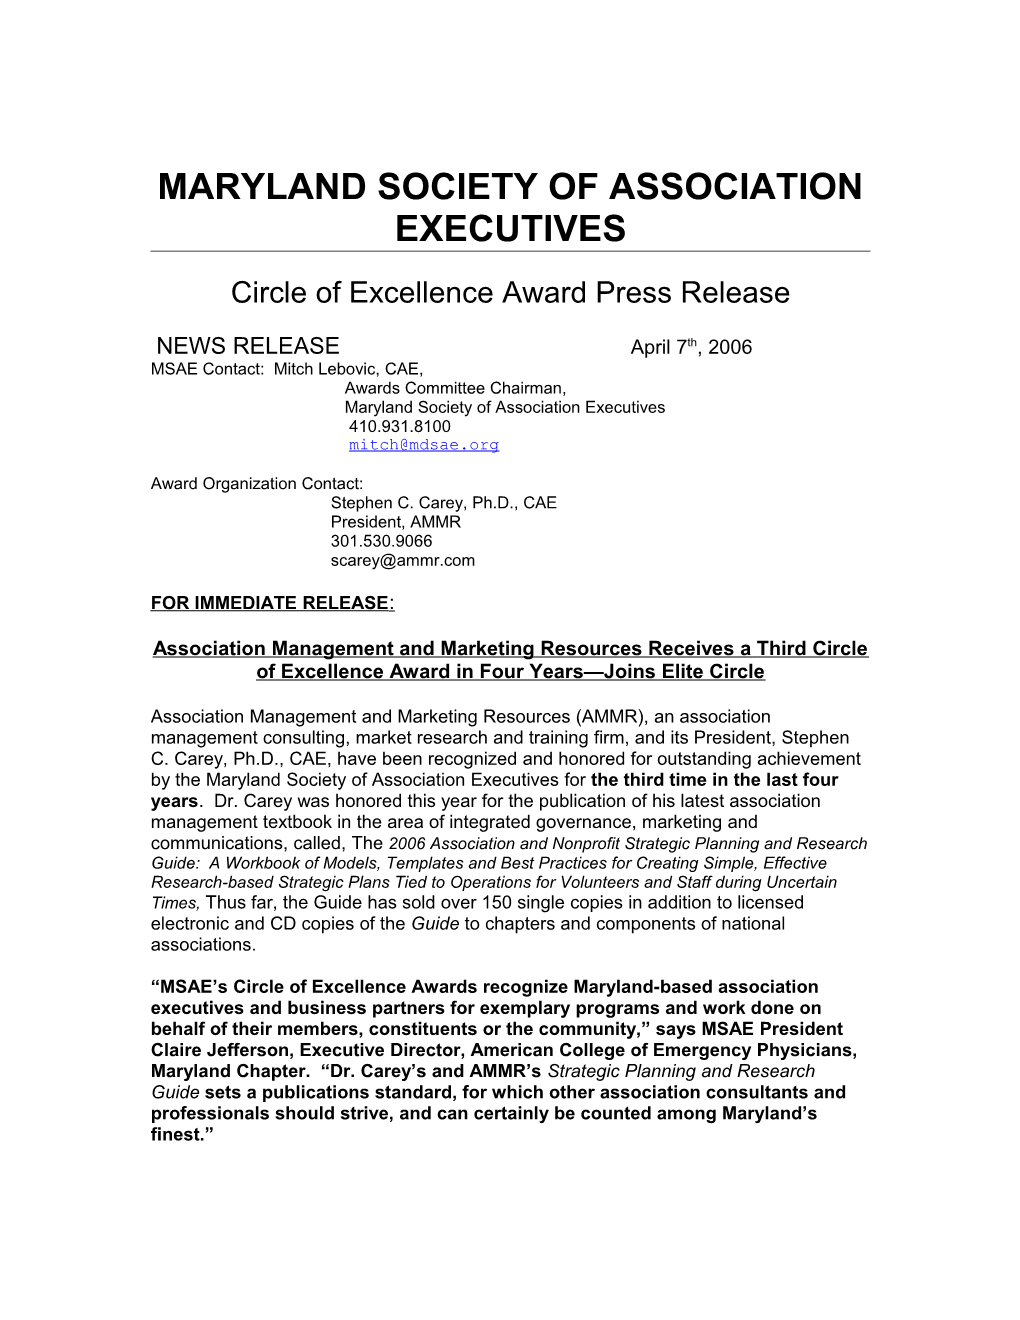 Maryland Society of Association Executives